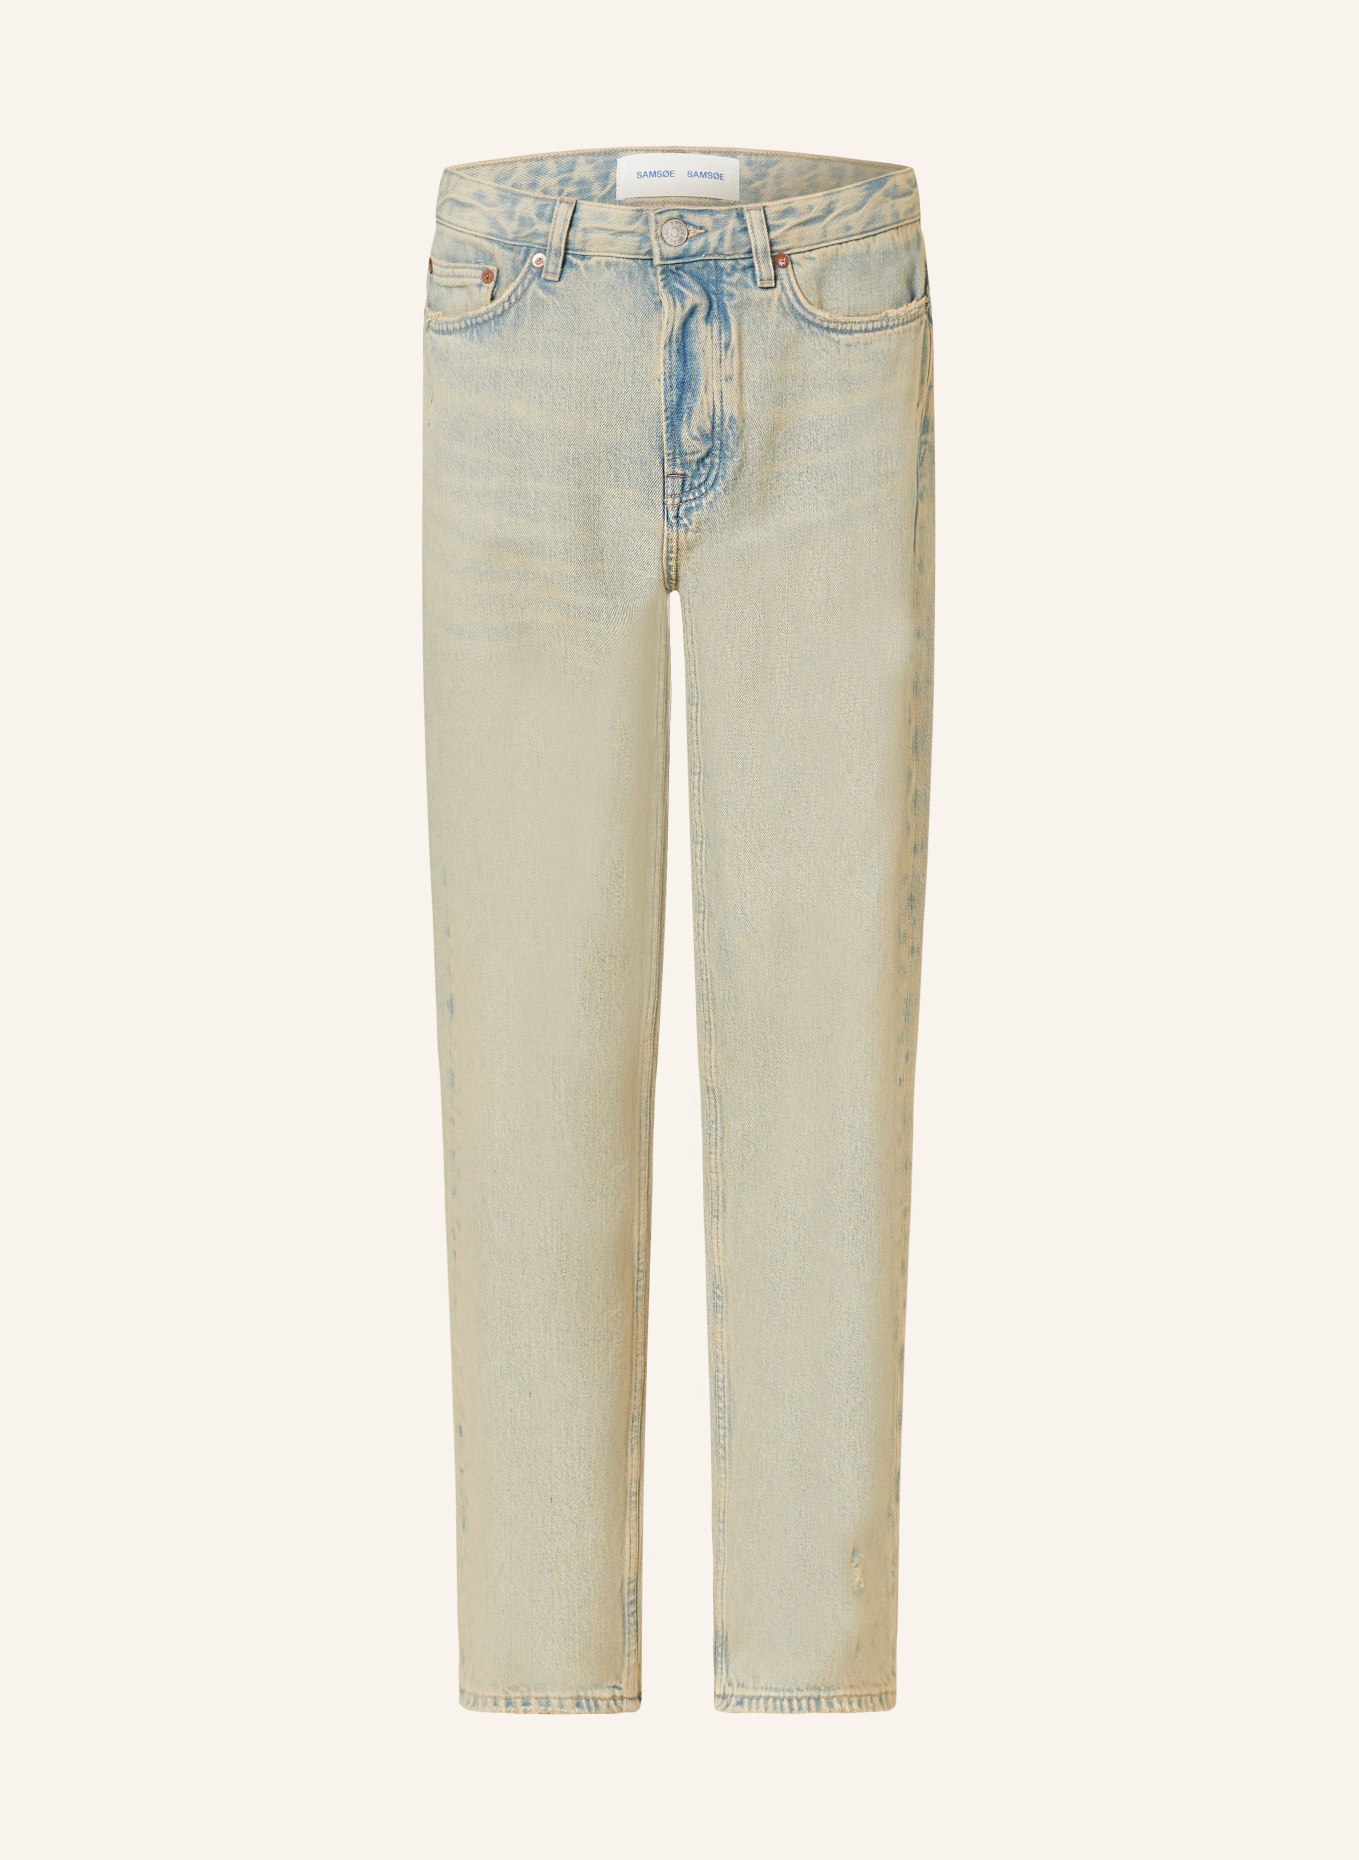 SAMSØE  SAMSØE Jeans EDDIE Regular Fit, Farbe: CLR001370 Khaki dust (Bild 1)